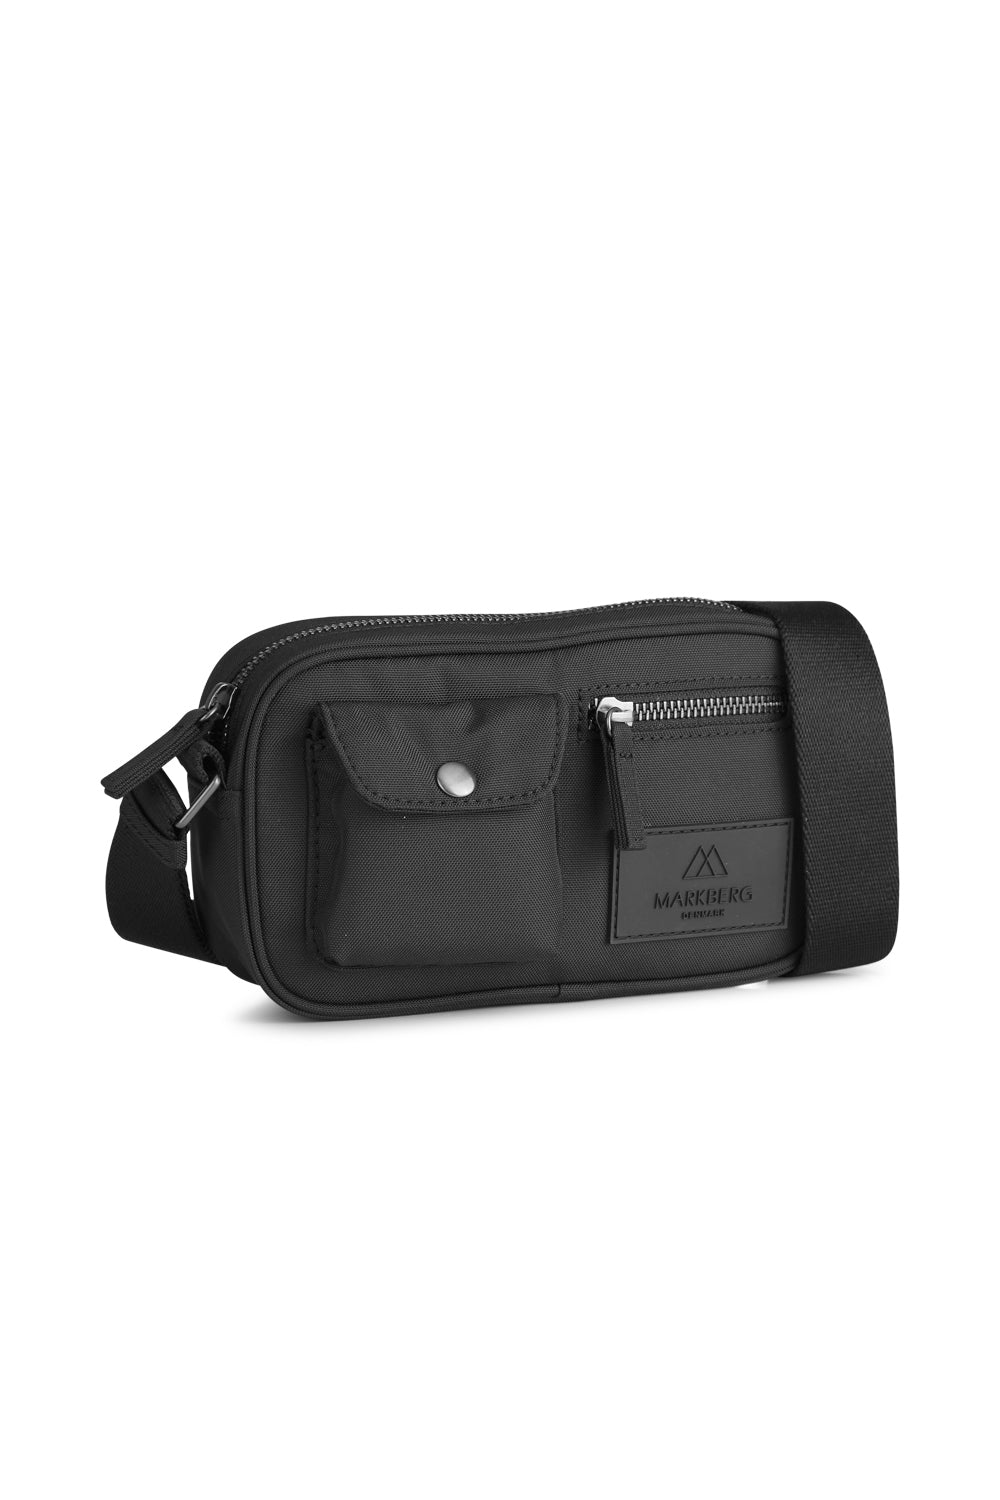 Darla S Crossbody Bag - Monochrome Black